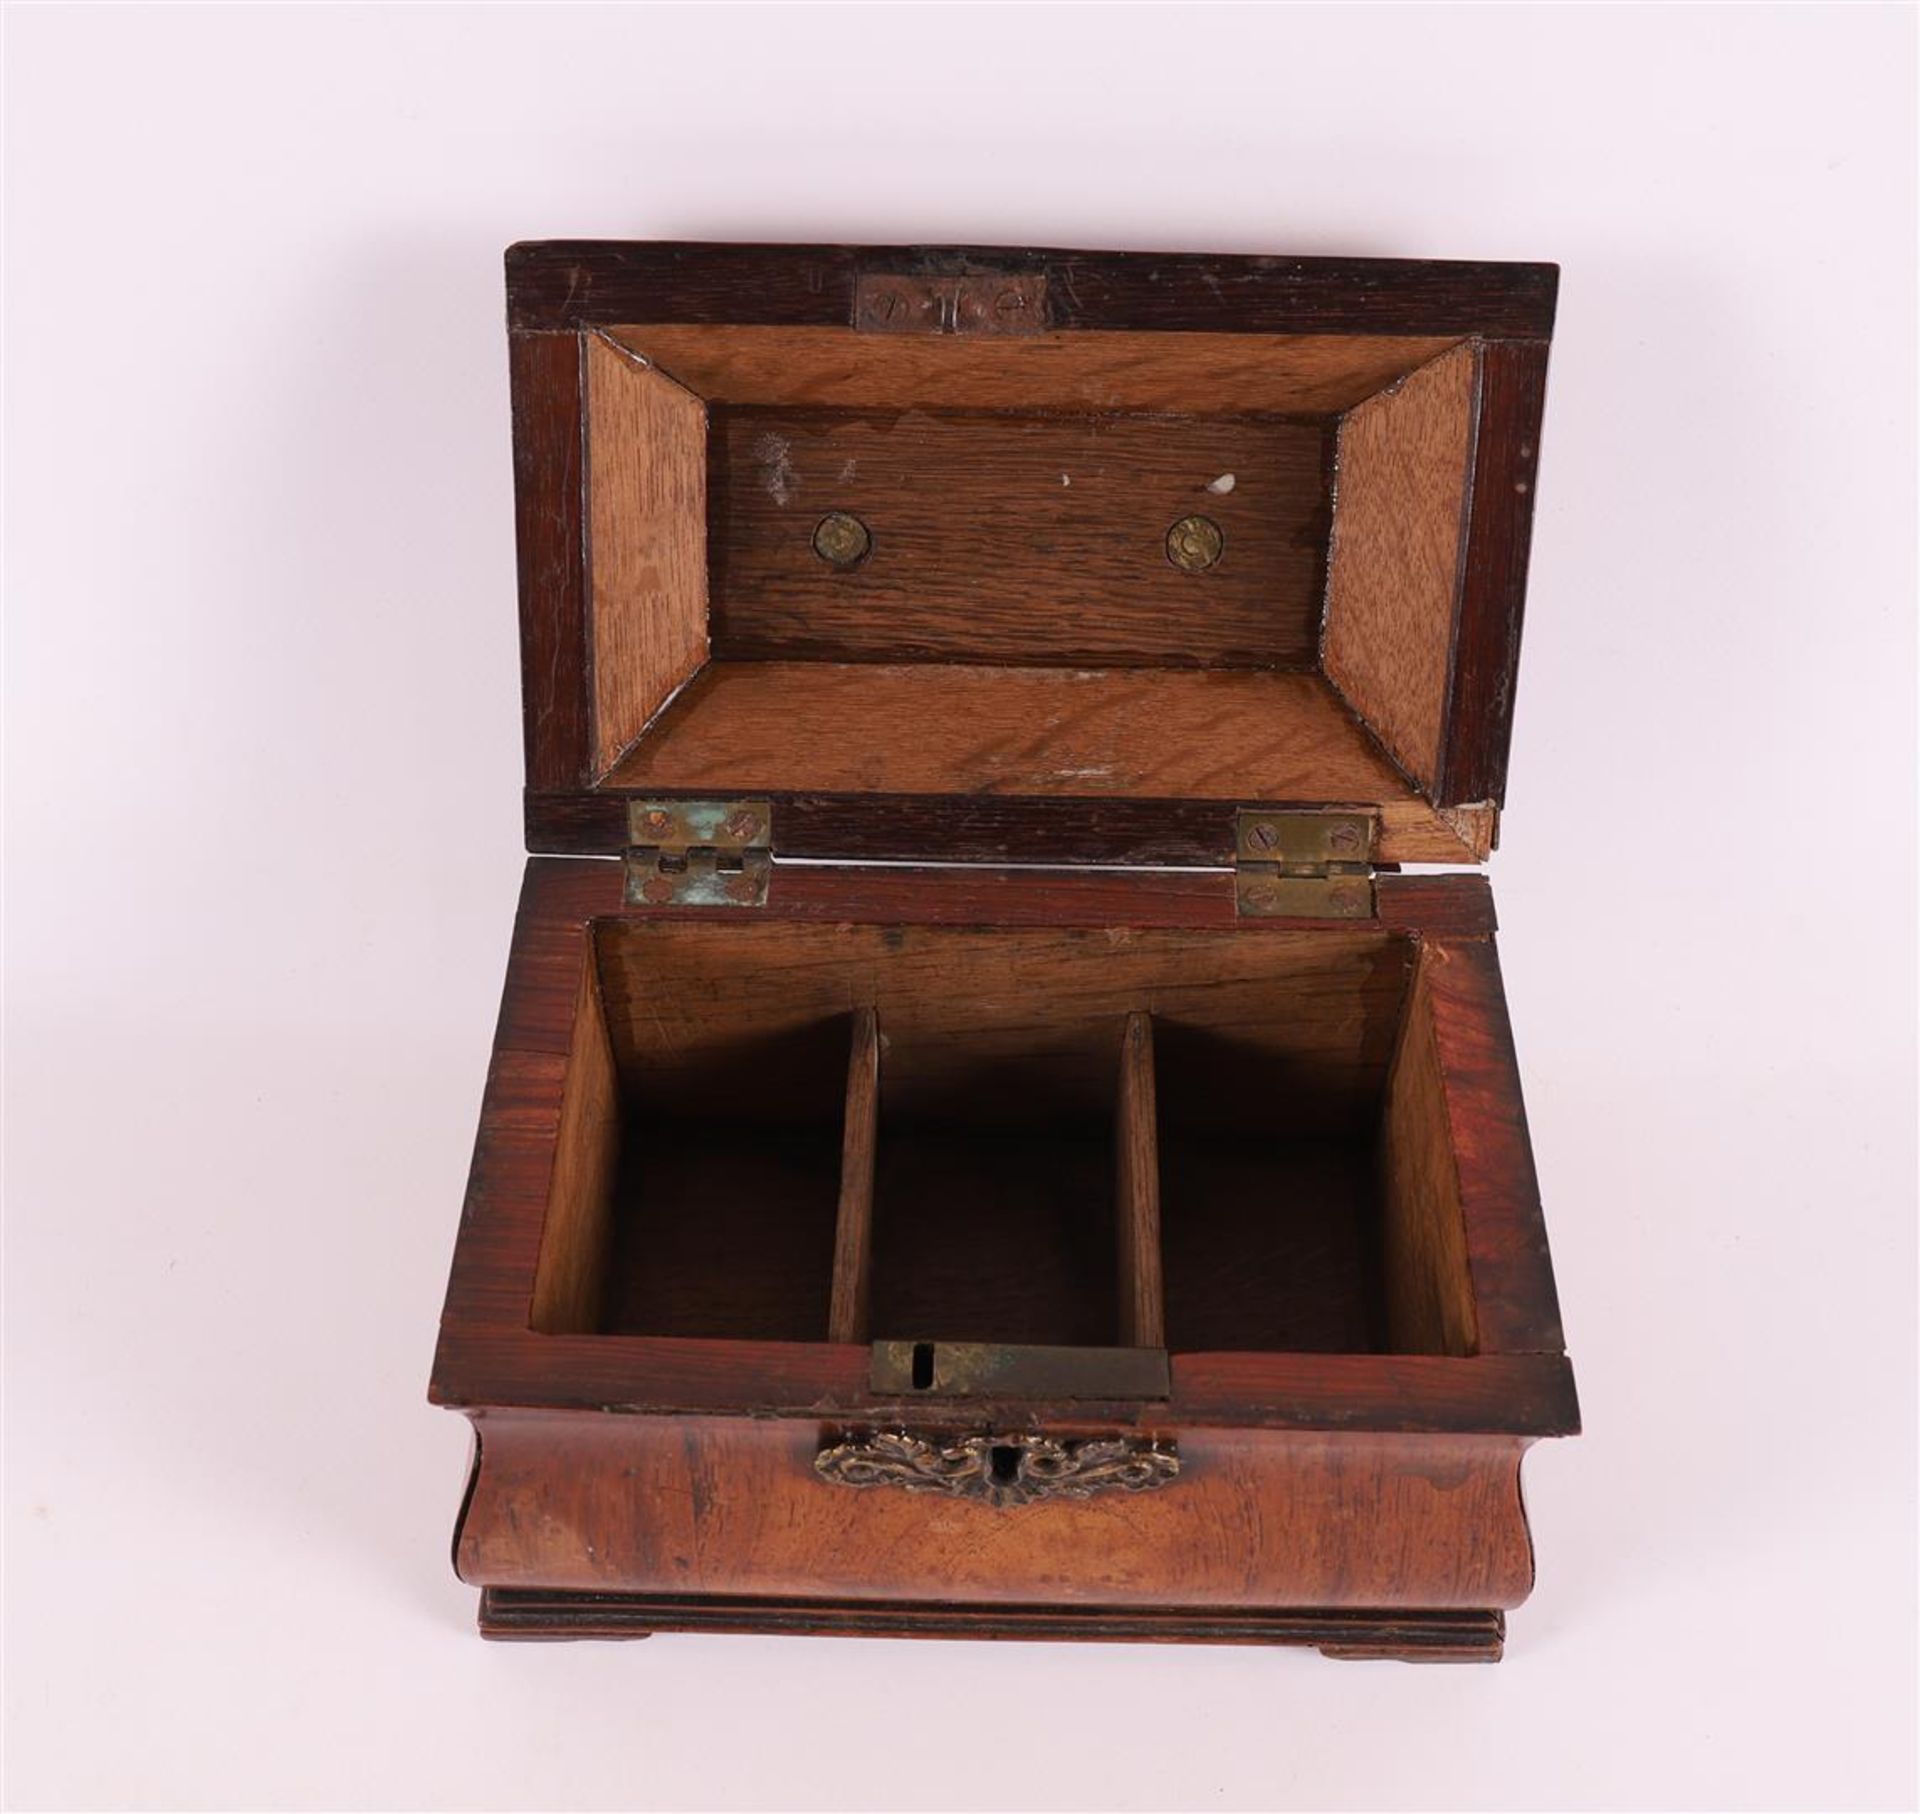 A Dutch rosewood tea box, mid 18th century, h 14 x l 20 x w 12 cm. - Image 5 of 7